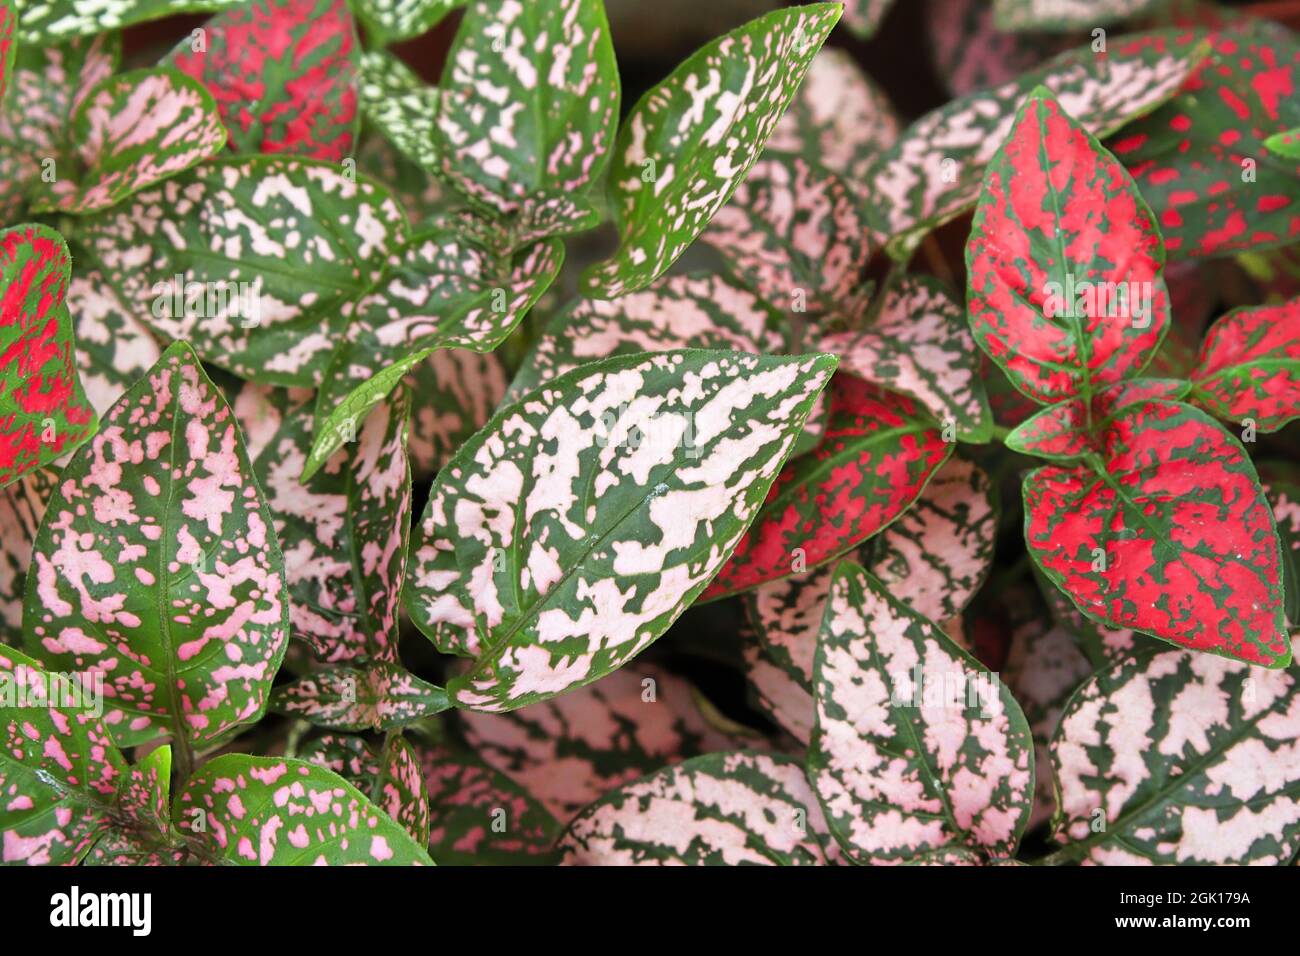 Varie foglie colorate in piante a pois di polka. Foto Stock